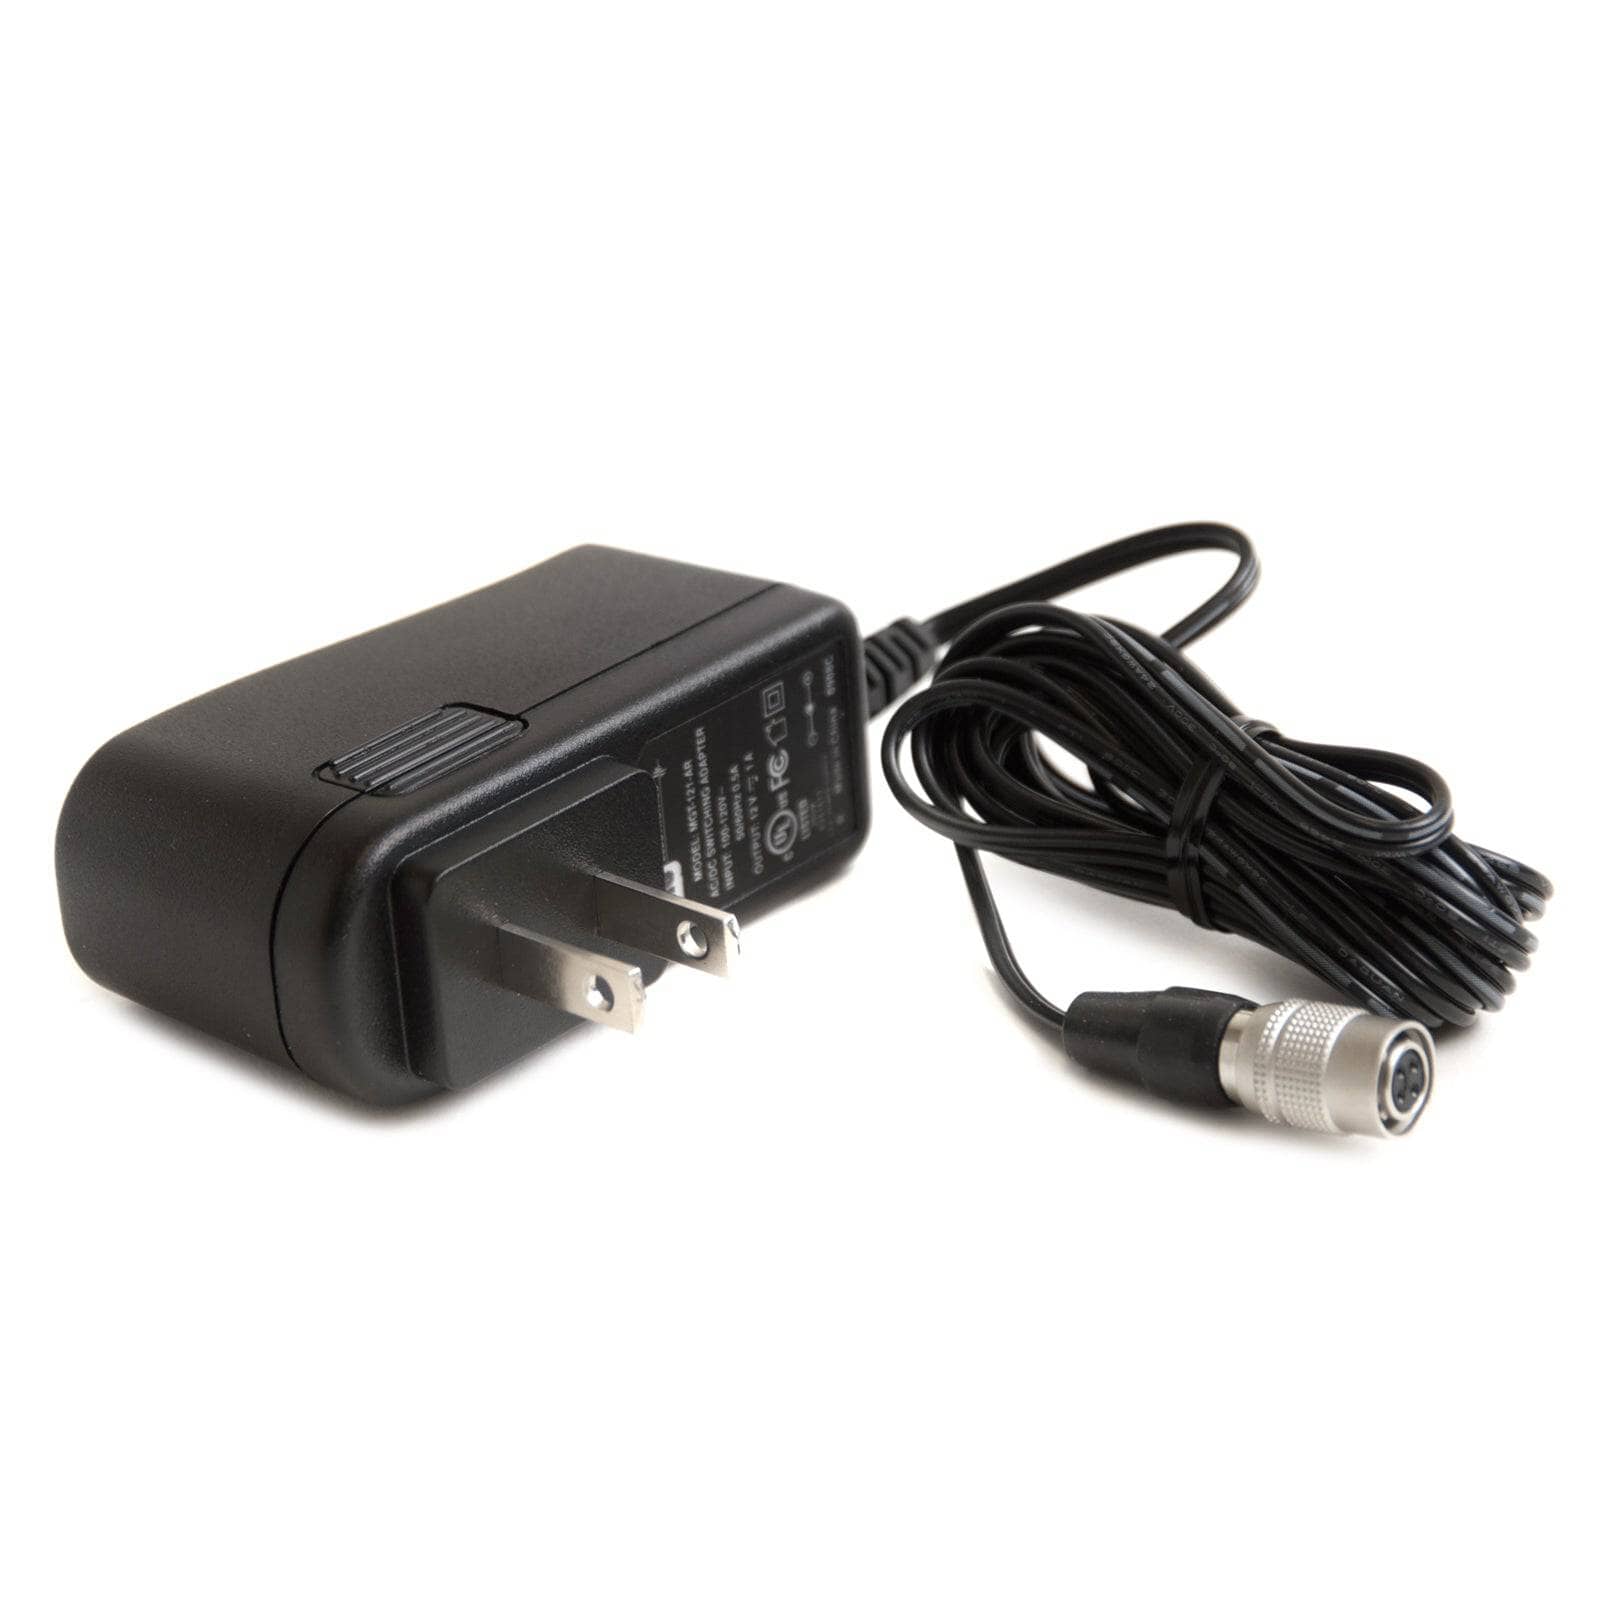 Universal Camera Control Unit Power Adapter 100-240VAC to 12VDC - InterTest, Inc.